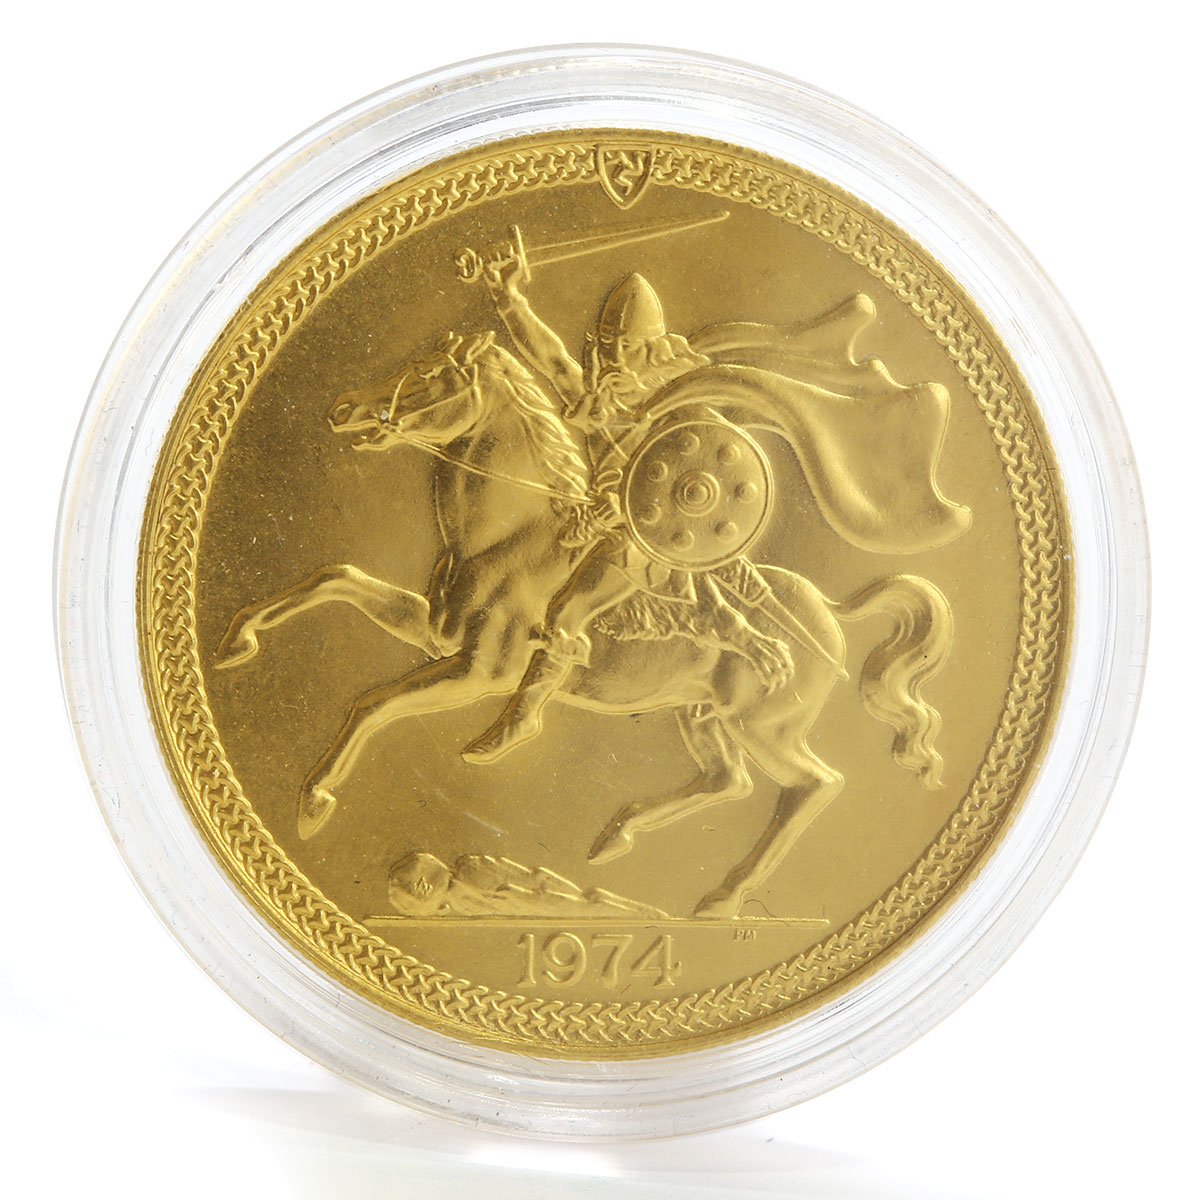 Islas of man 1 pound Mounted Soldier Queen Elizabeth II gold coin 1974